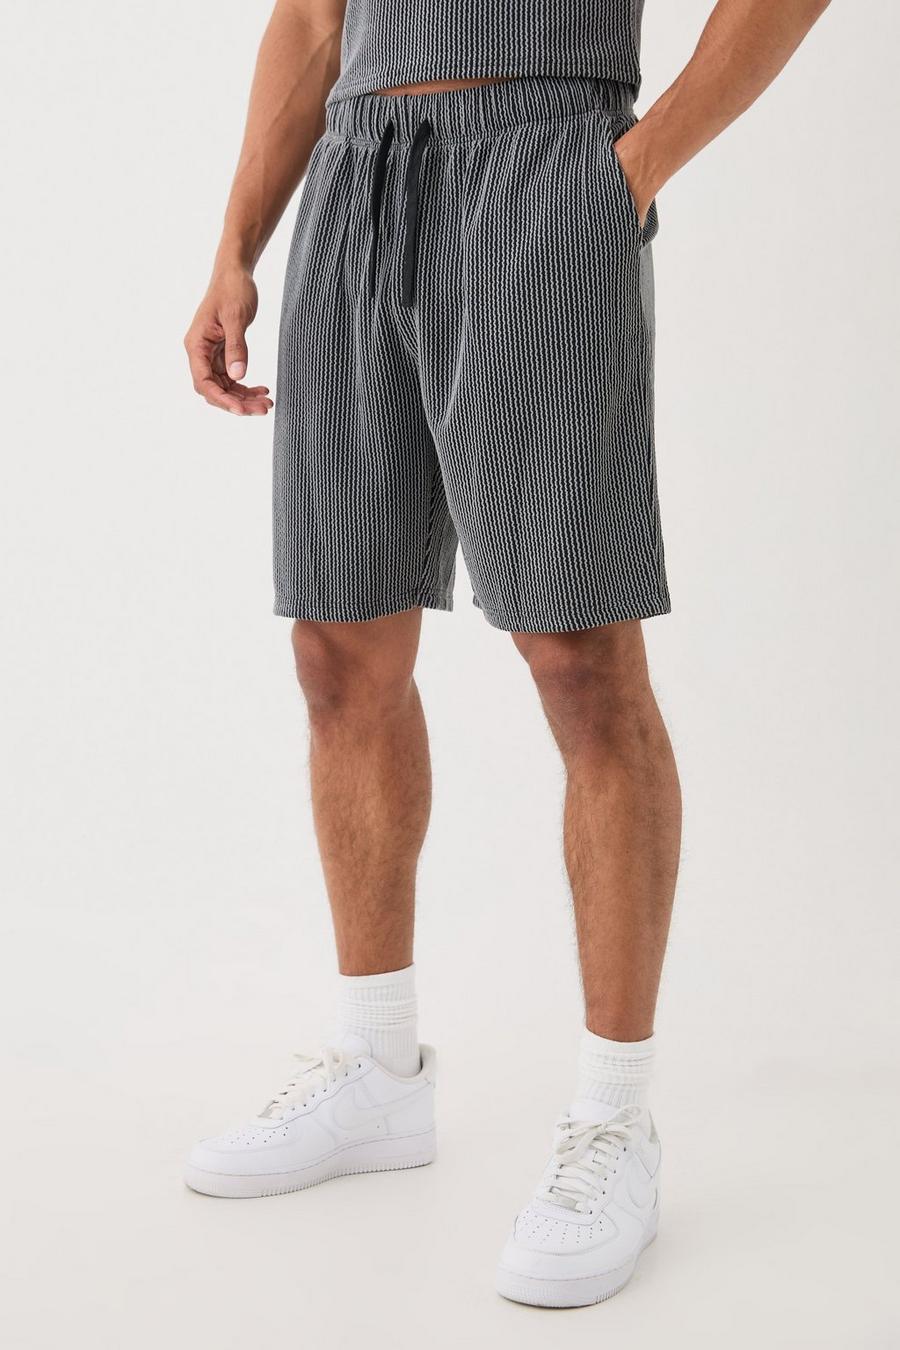 Black Mellanlånga randiga shorts med ledig passform